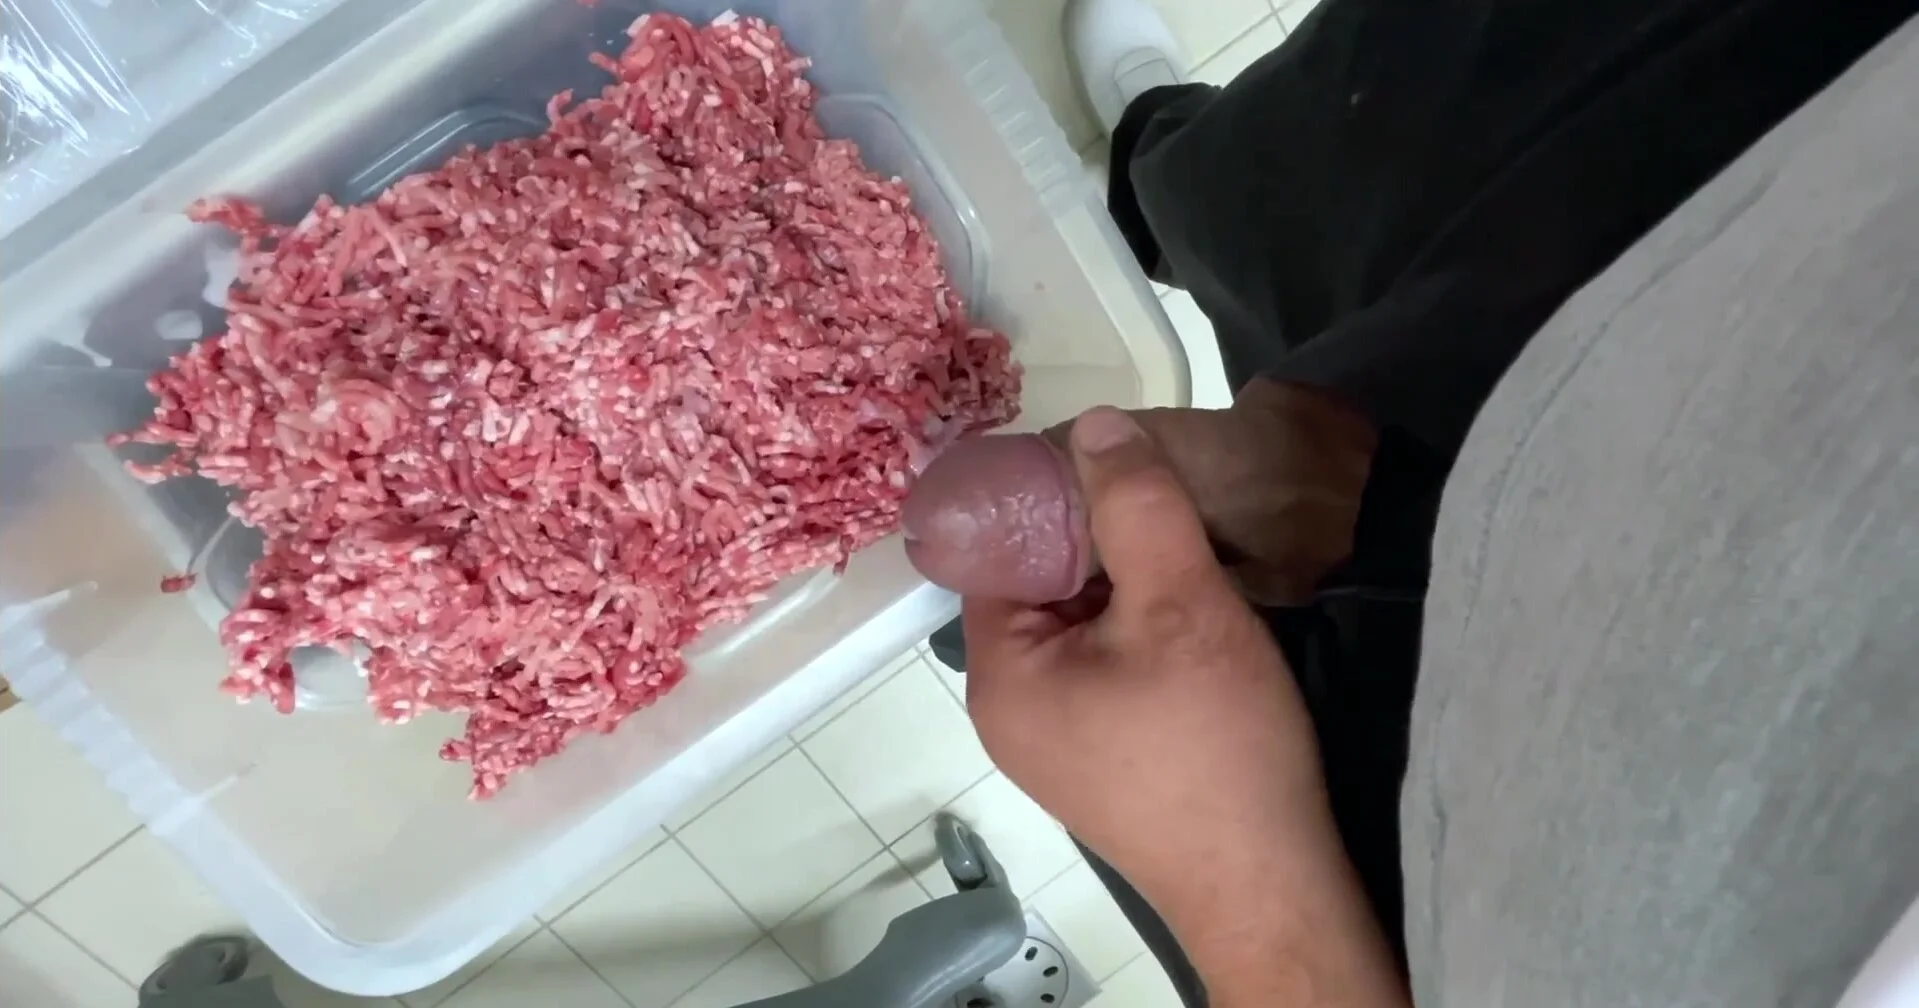 Food Cum & Piss: Butcher Cum in Meat - ThisVid.com